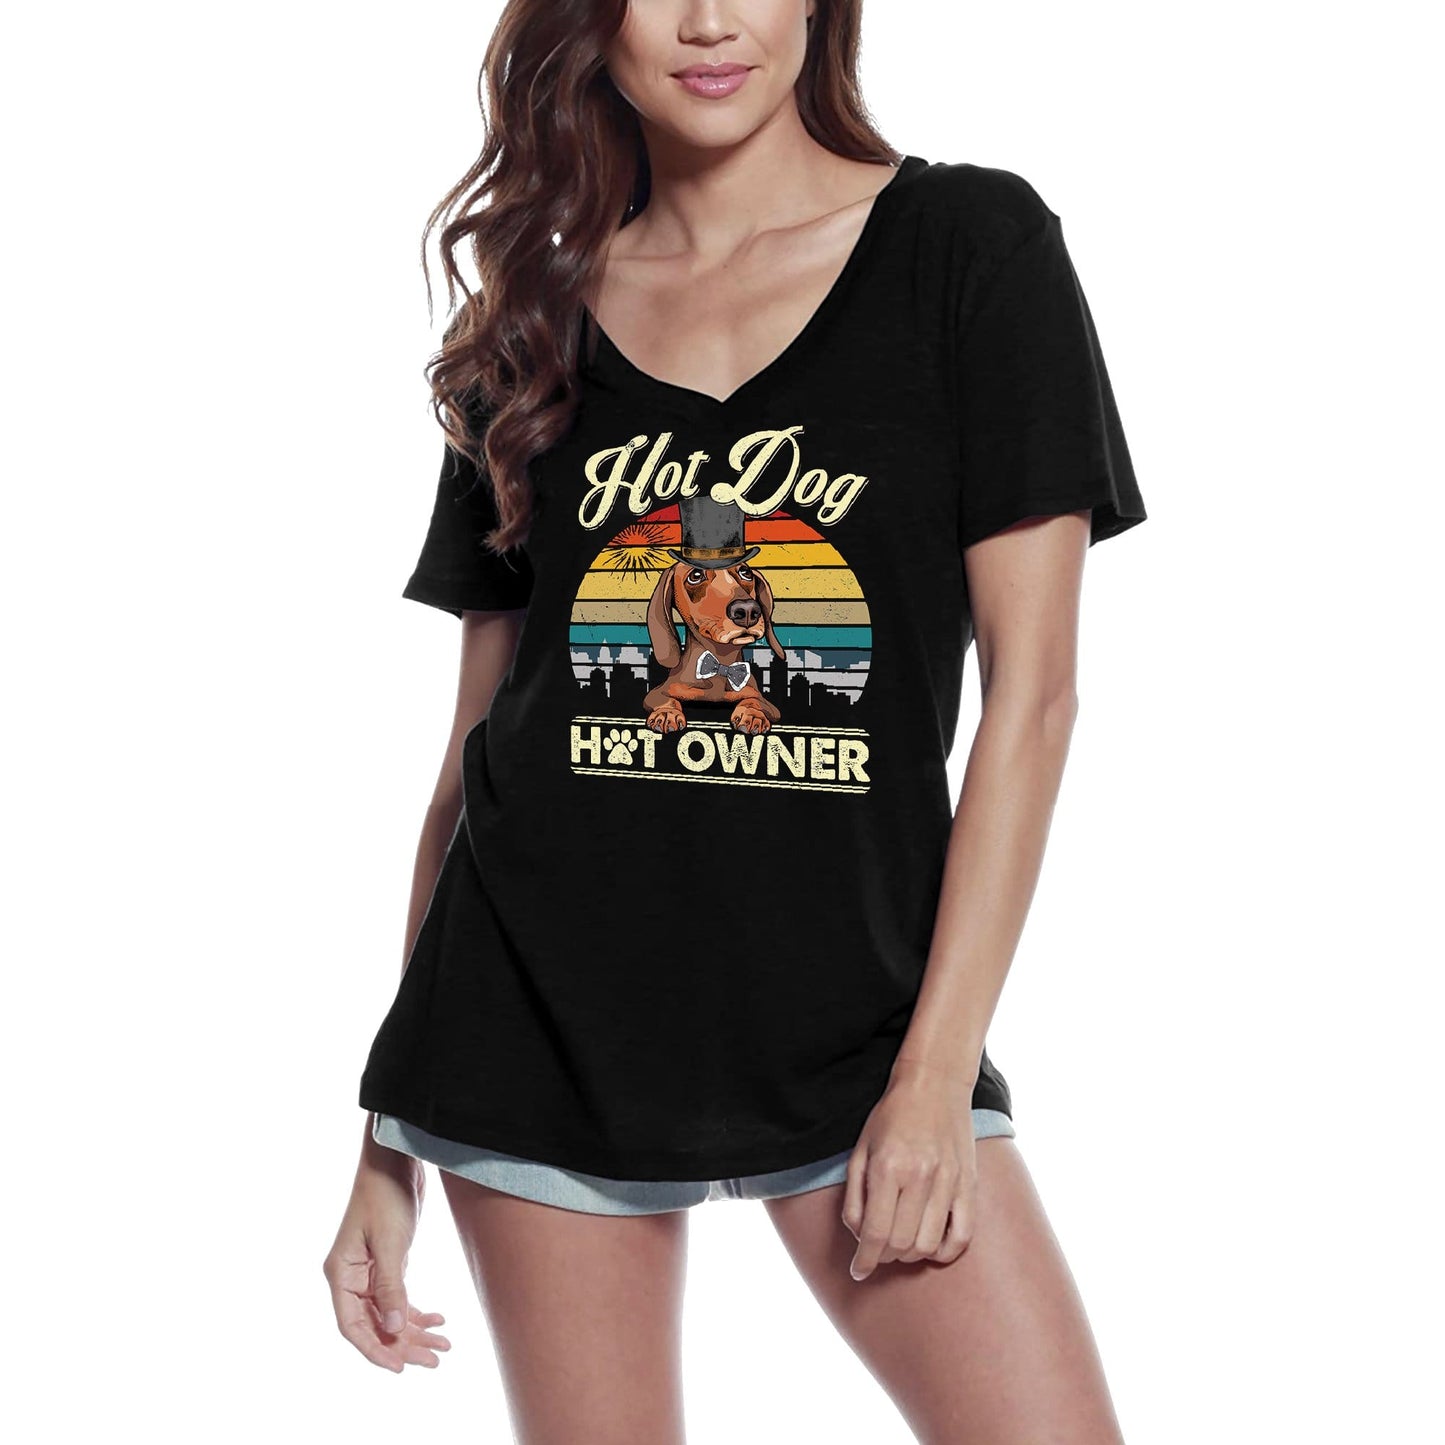 ULTRABASIC Women's Retro T-Shirt Hot Dog Hot Owner - Funny Dog Tee Shirt